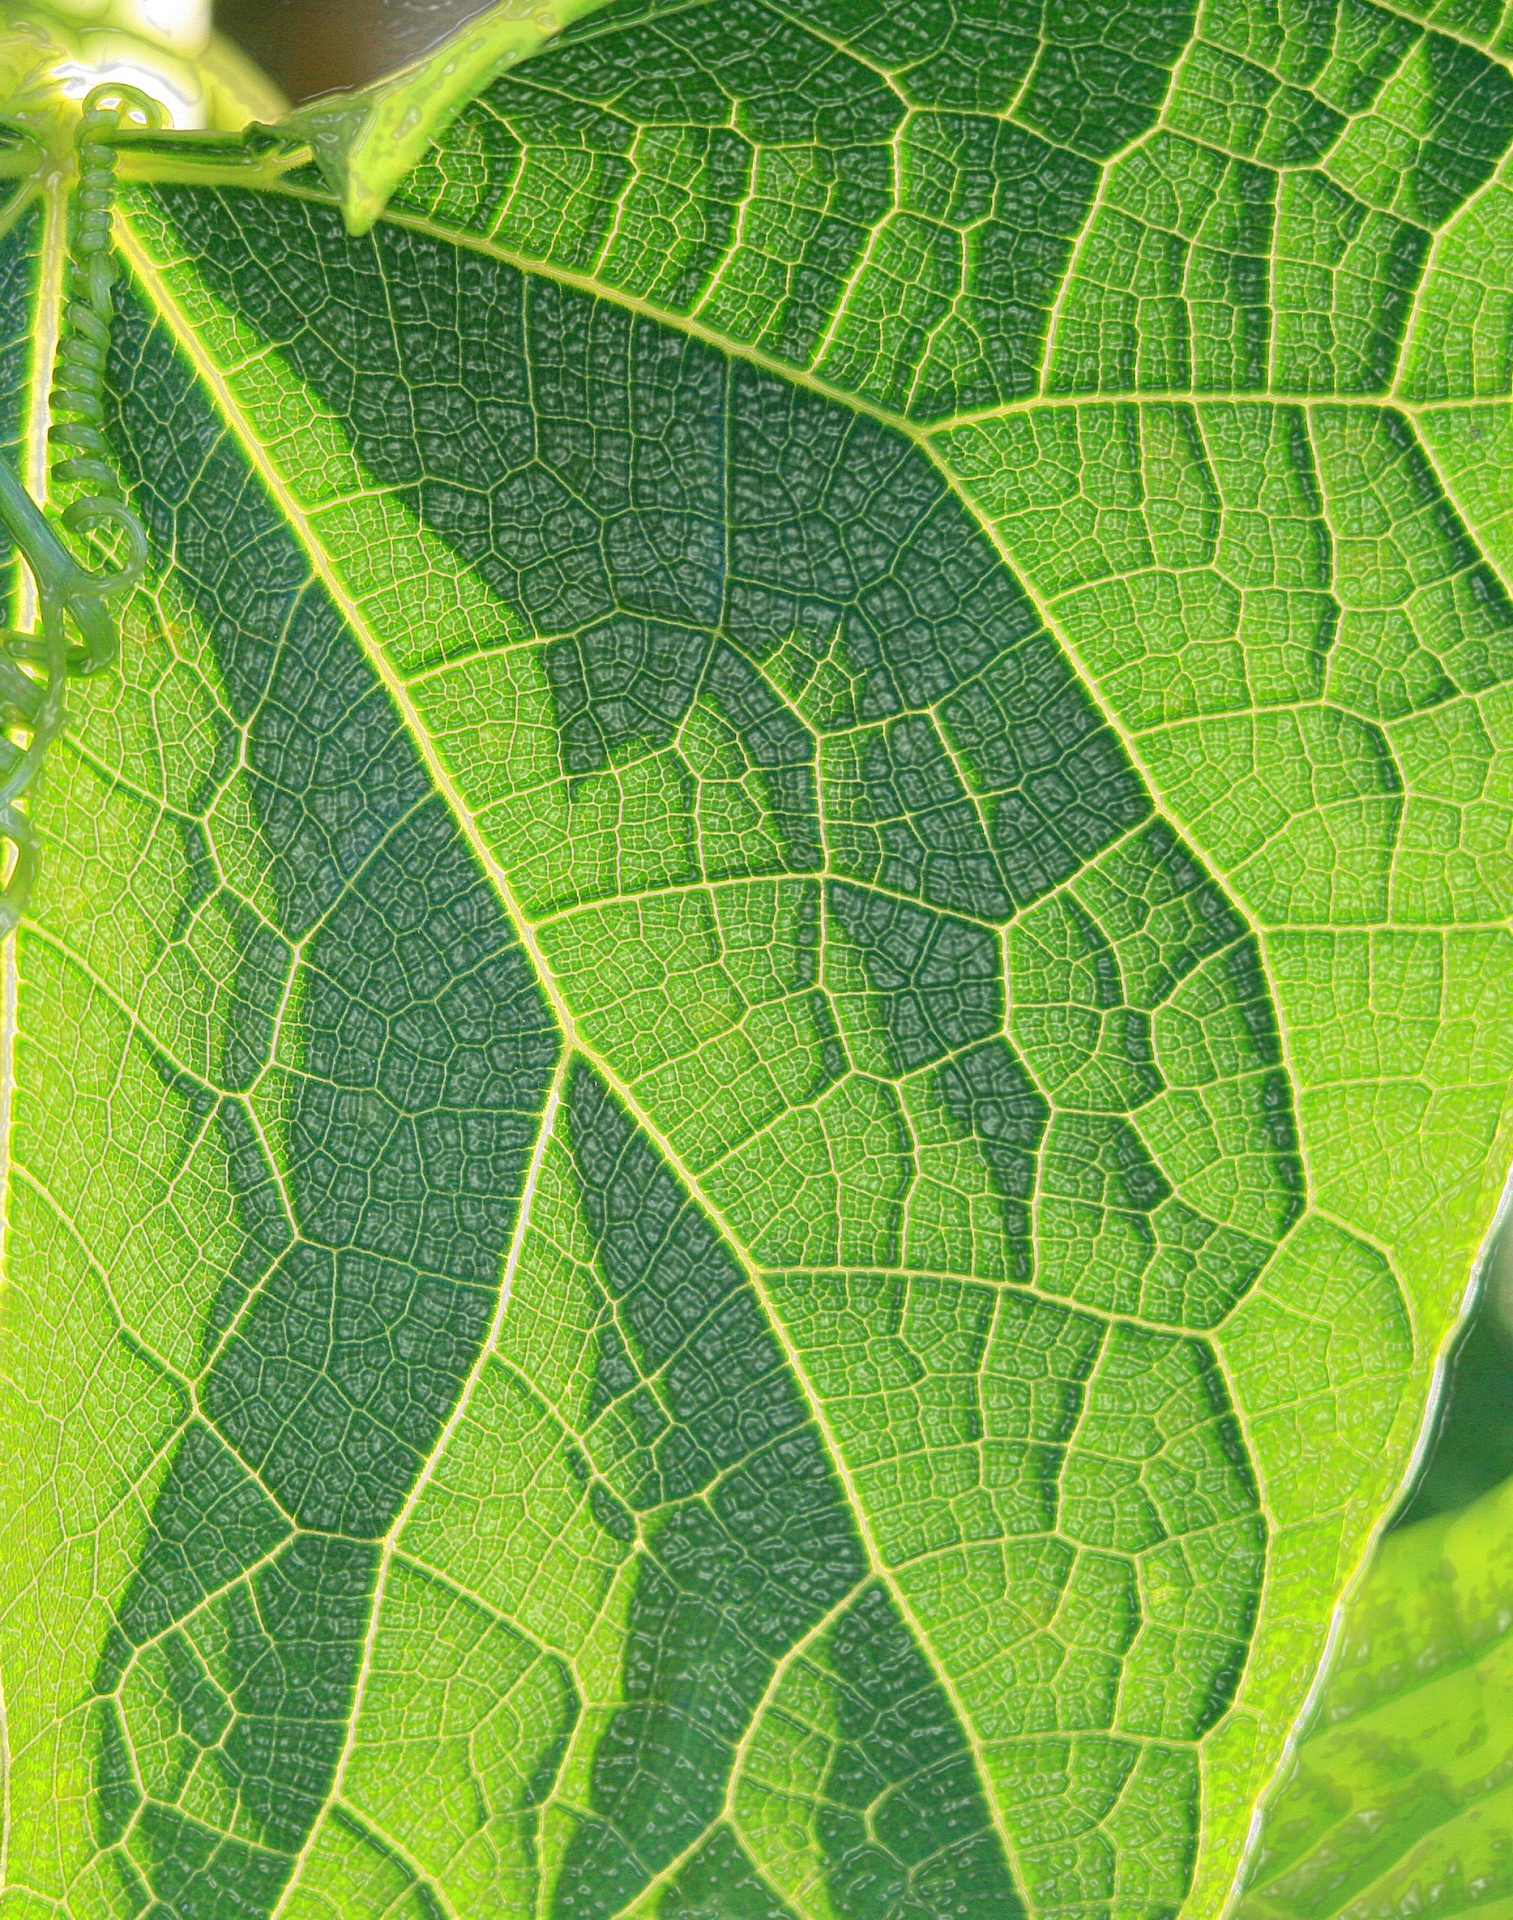 leaf veined mapped free photo